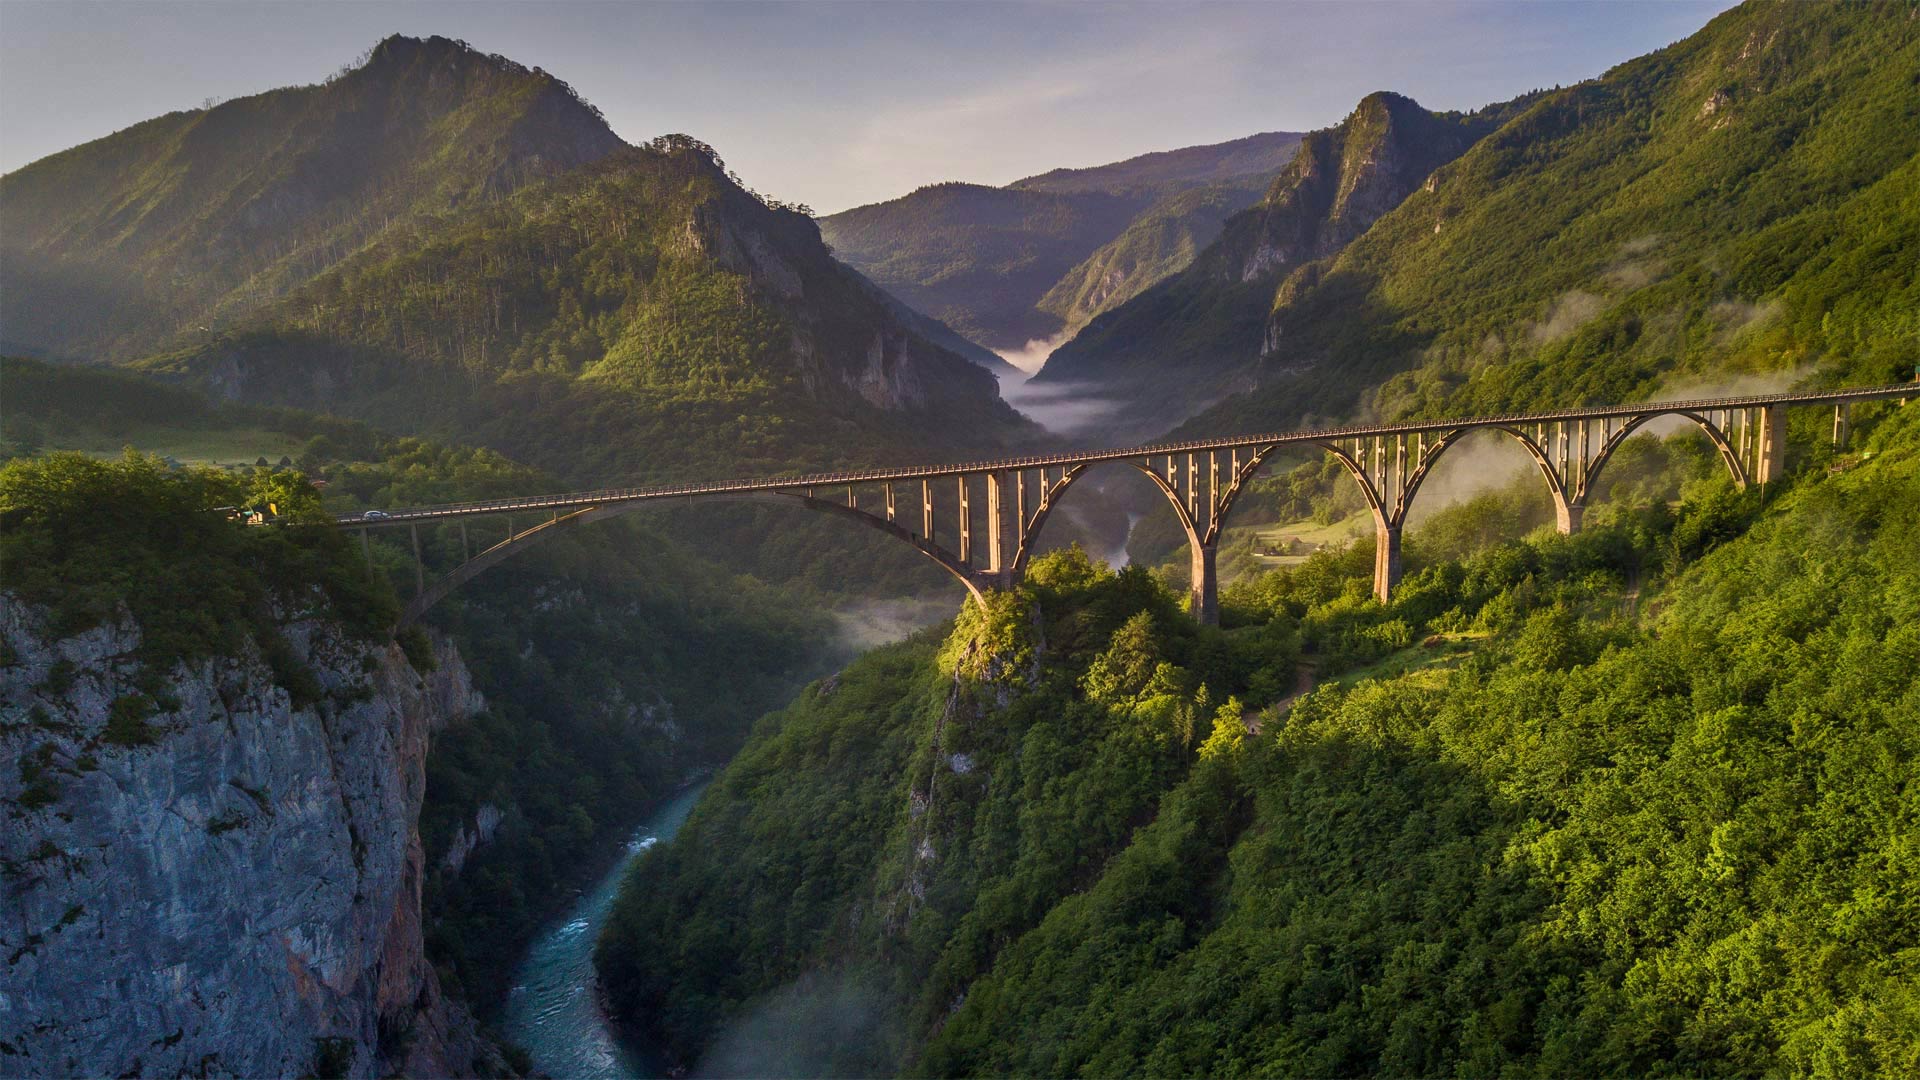 Đurđevića Tara Bridge in Montenegro - Hike The World/Shutterstock)